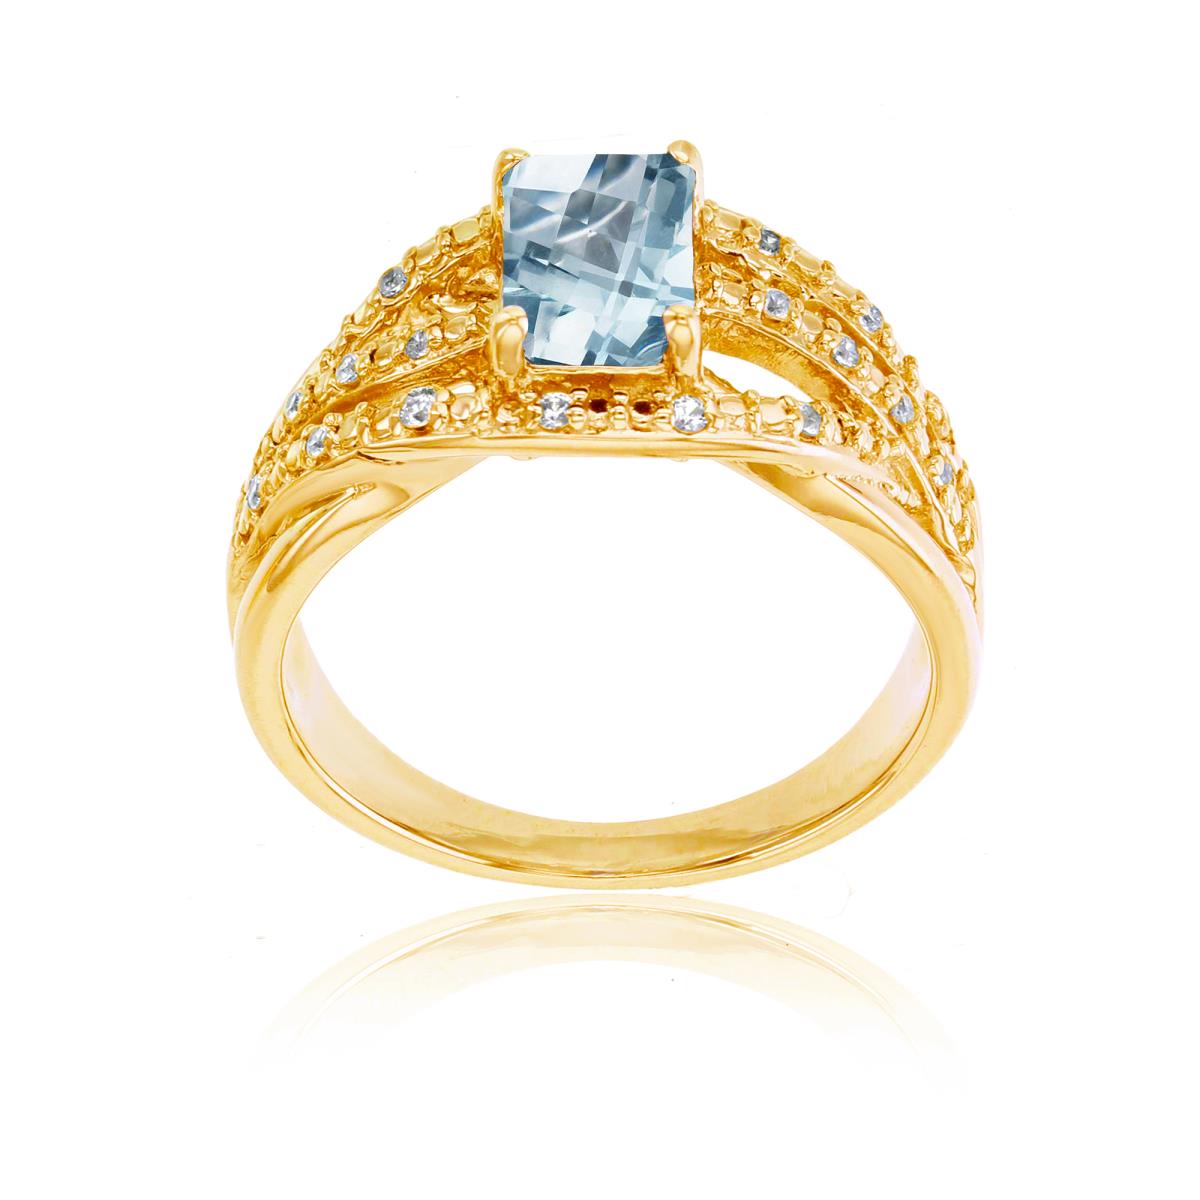 10K Yellow Gold 0.10 CTTW Rnd Diamond & 7x5mm Oct Aquamarine Ring